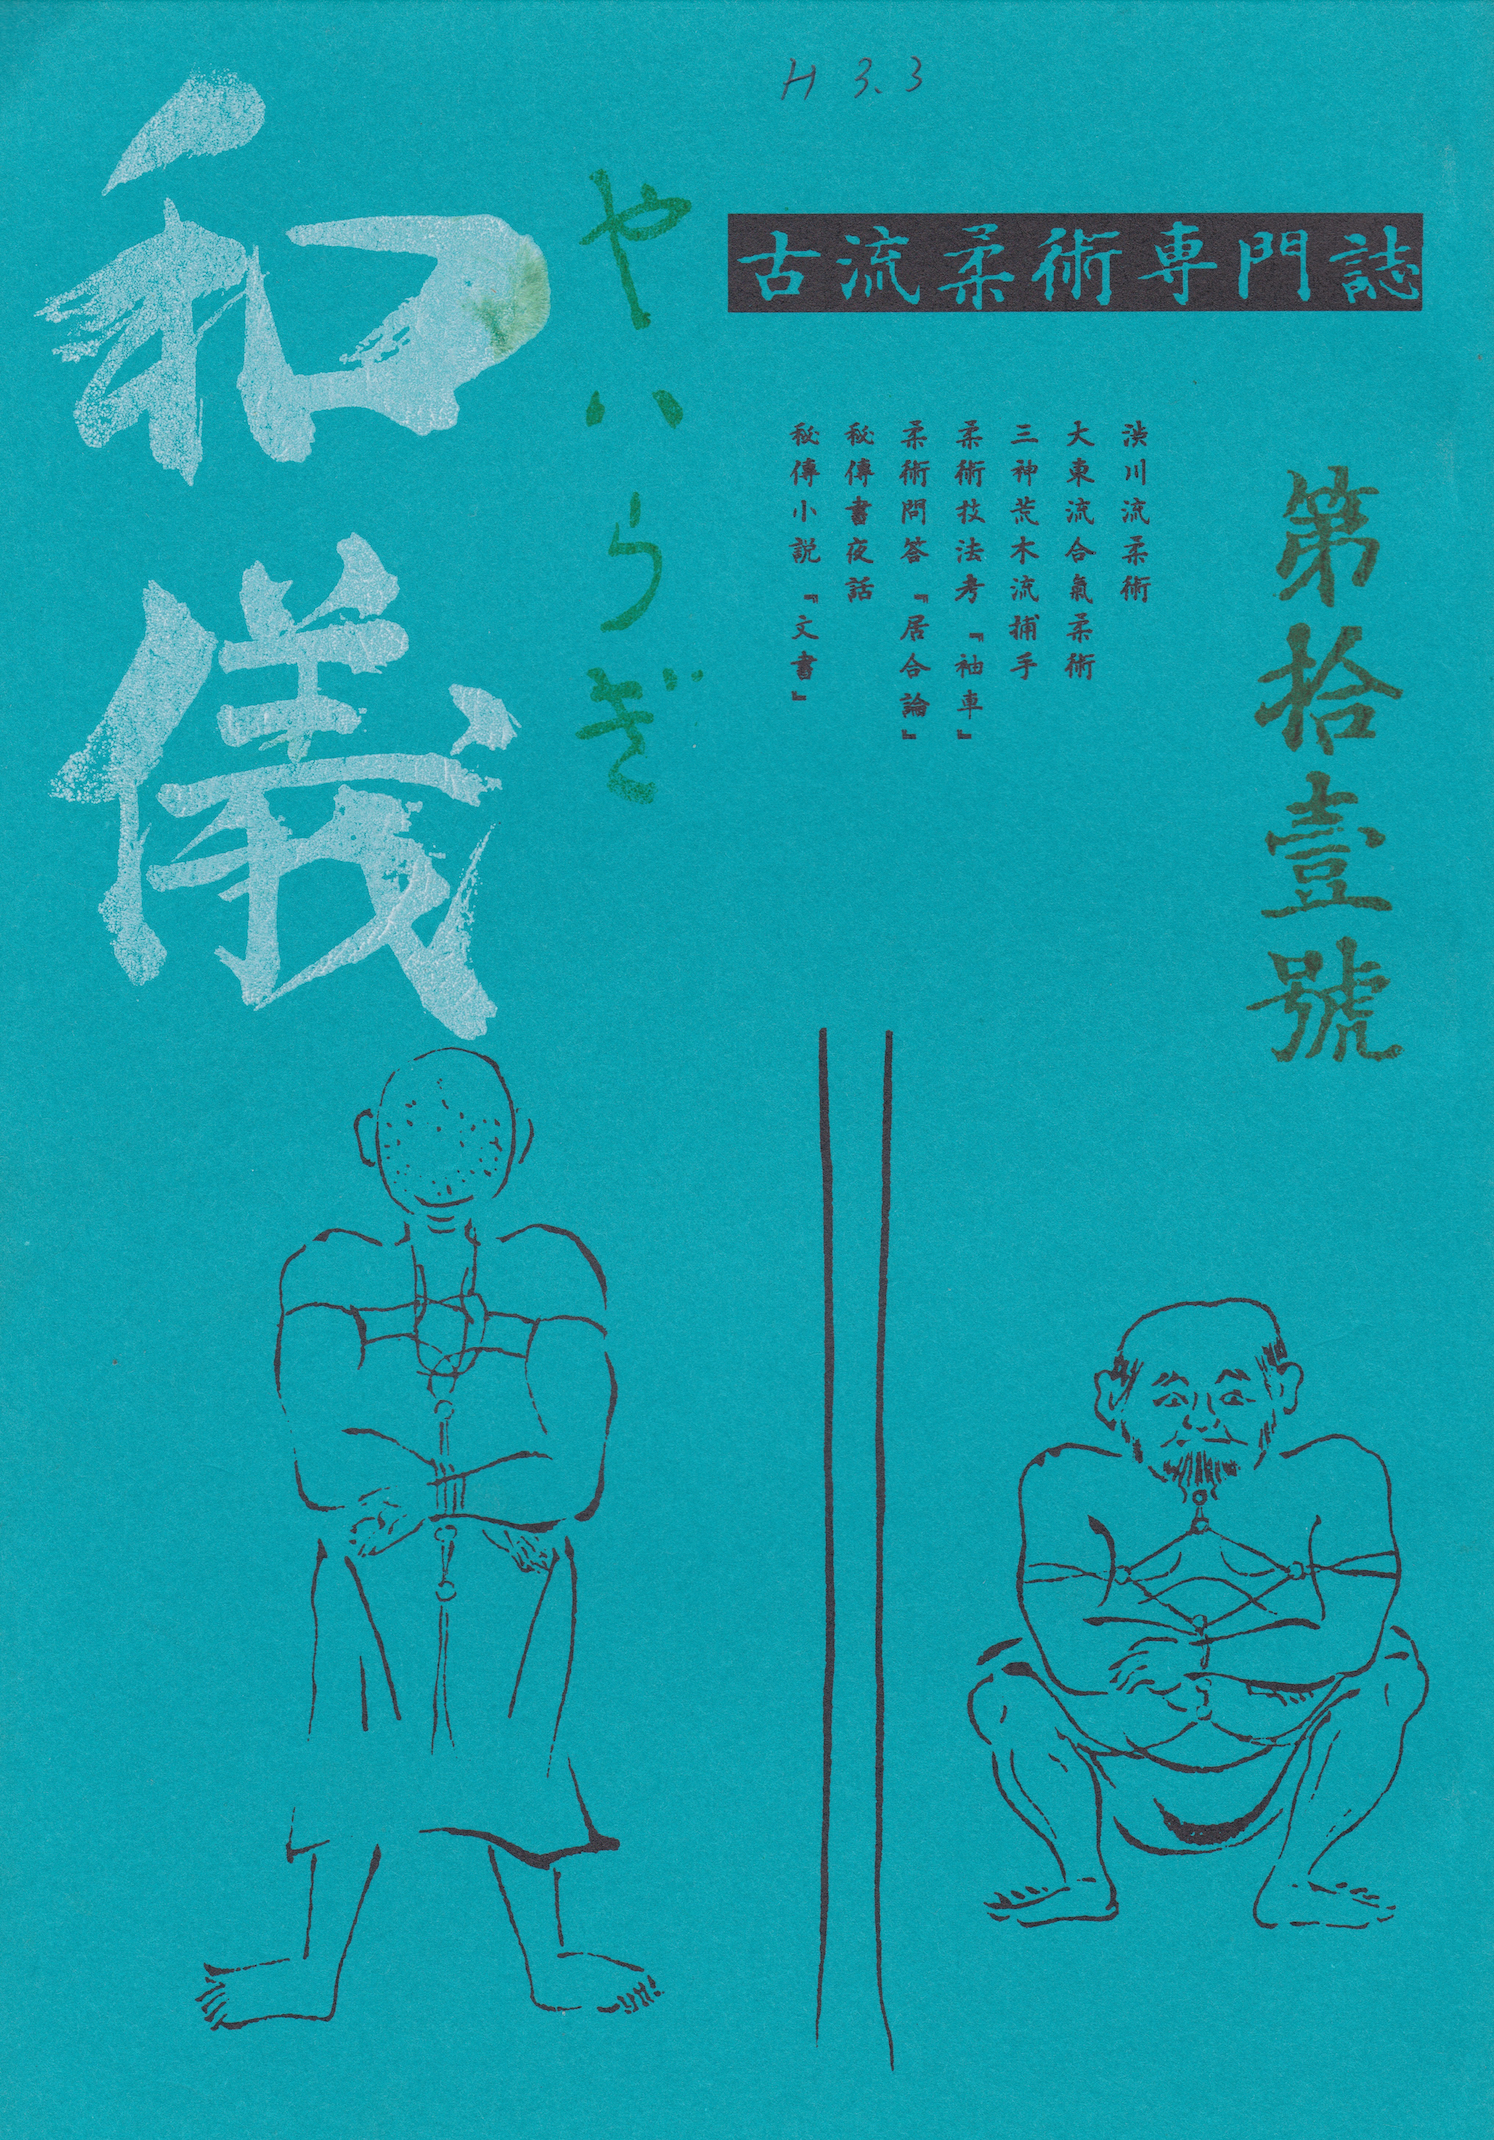 Yairagi Koryu Jujutsu Research Journal #11 (Preowned)